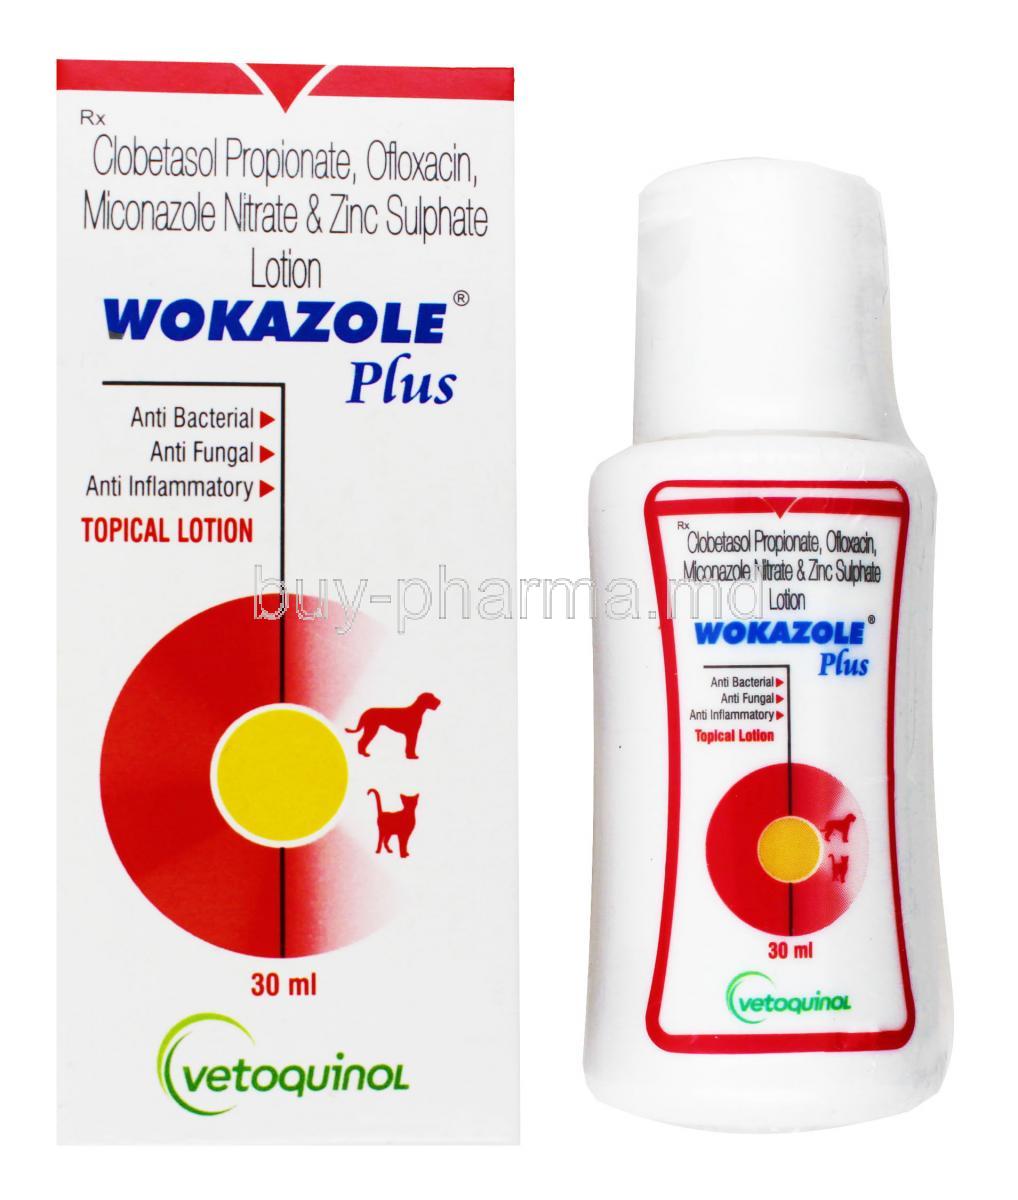 Wokazole Plus box and bottle